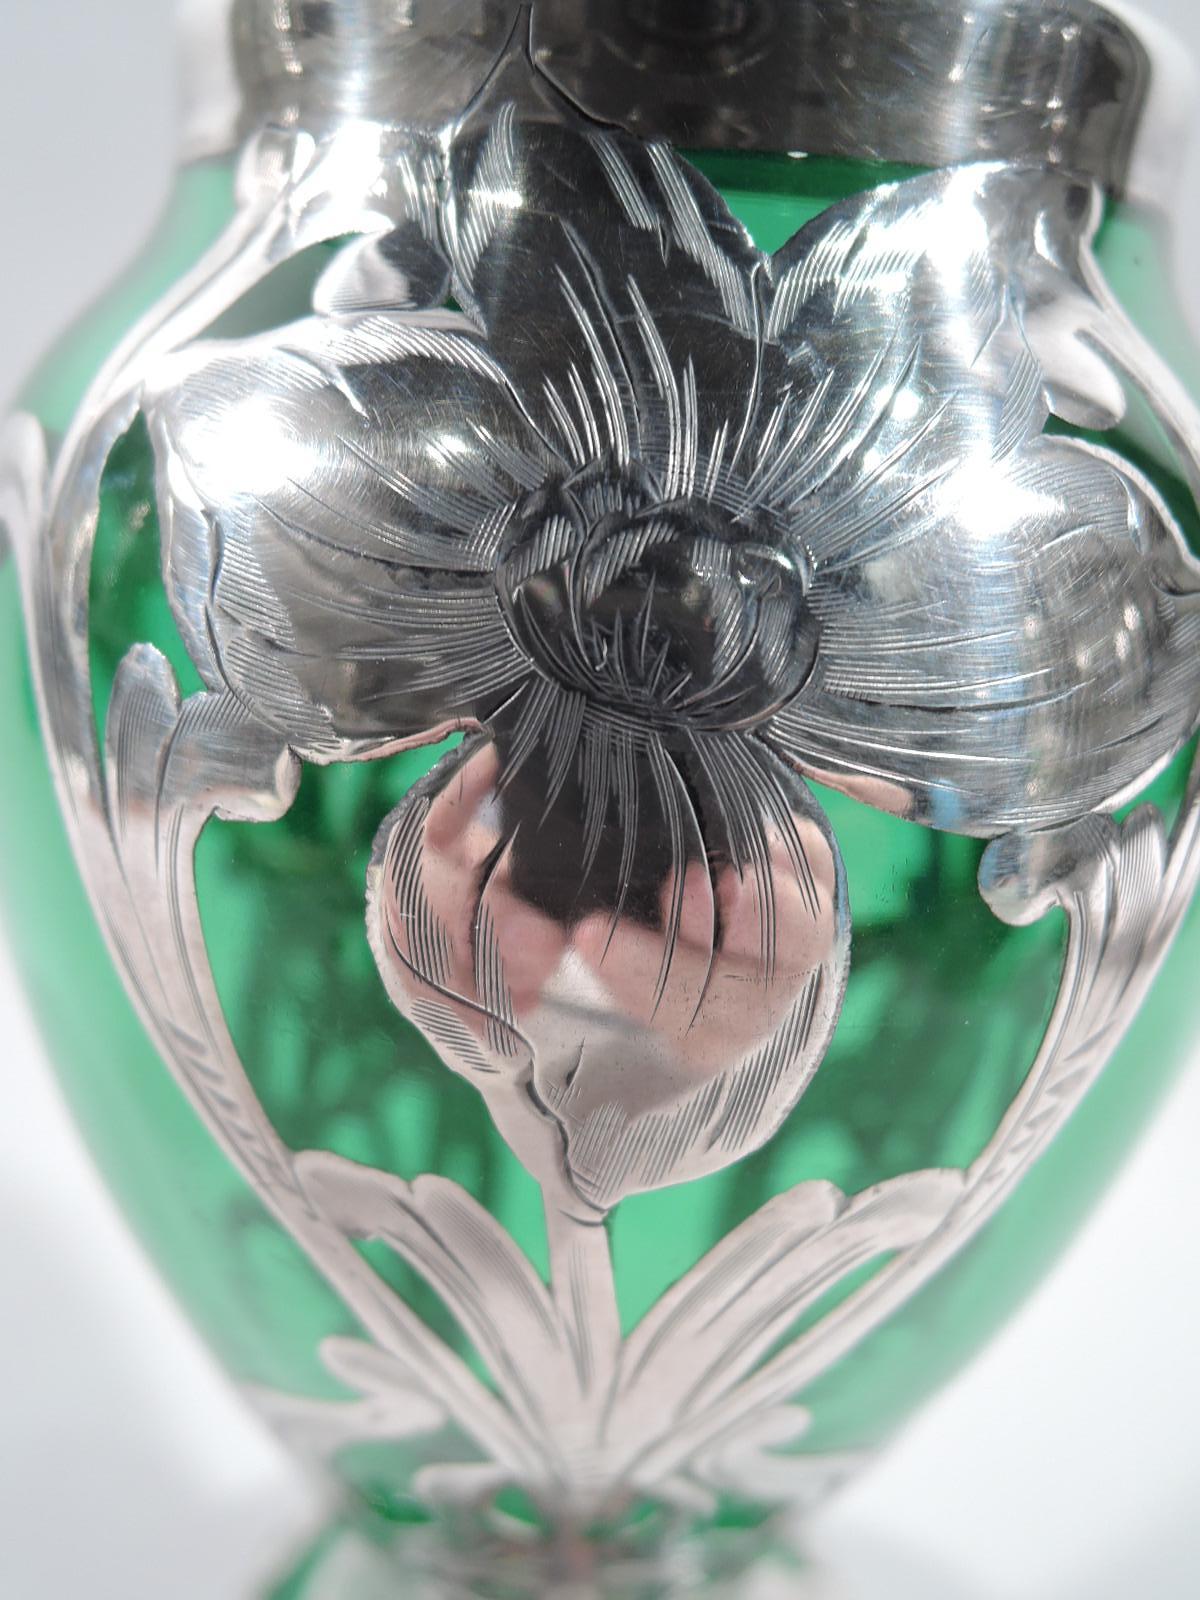 20th Century Antique American Art Nouveau Green Silver Overlay Vase